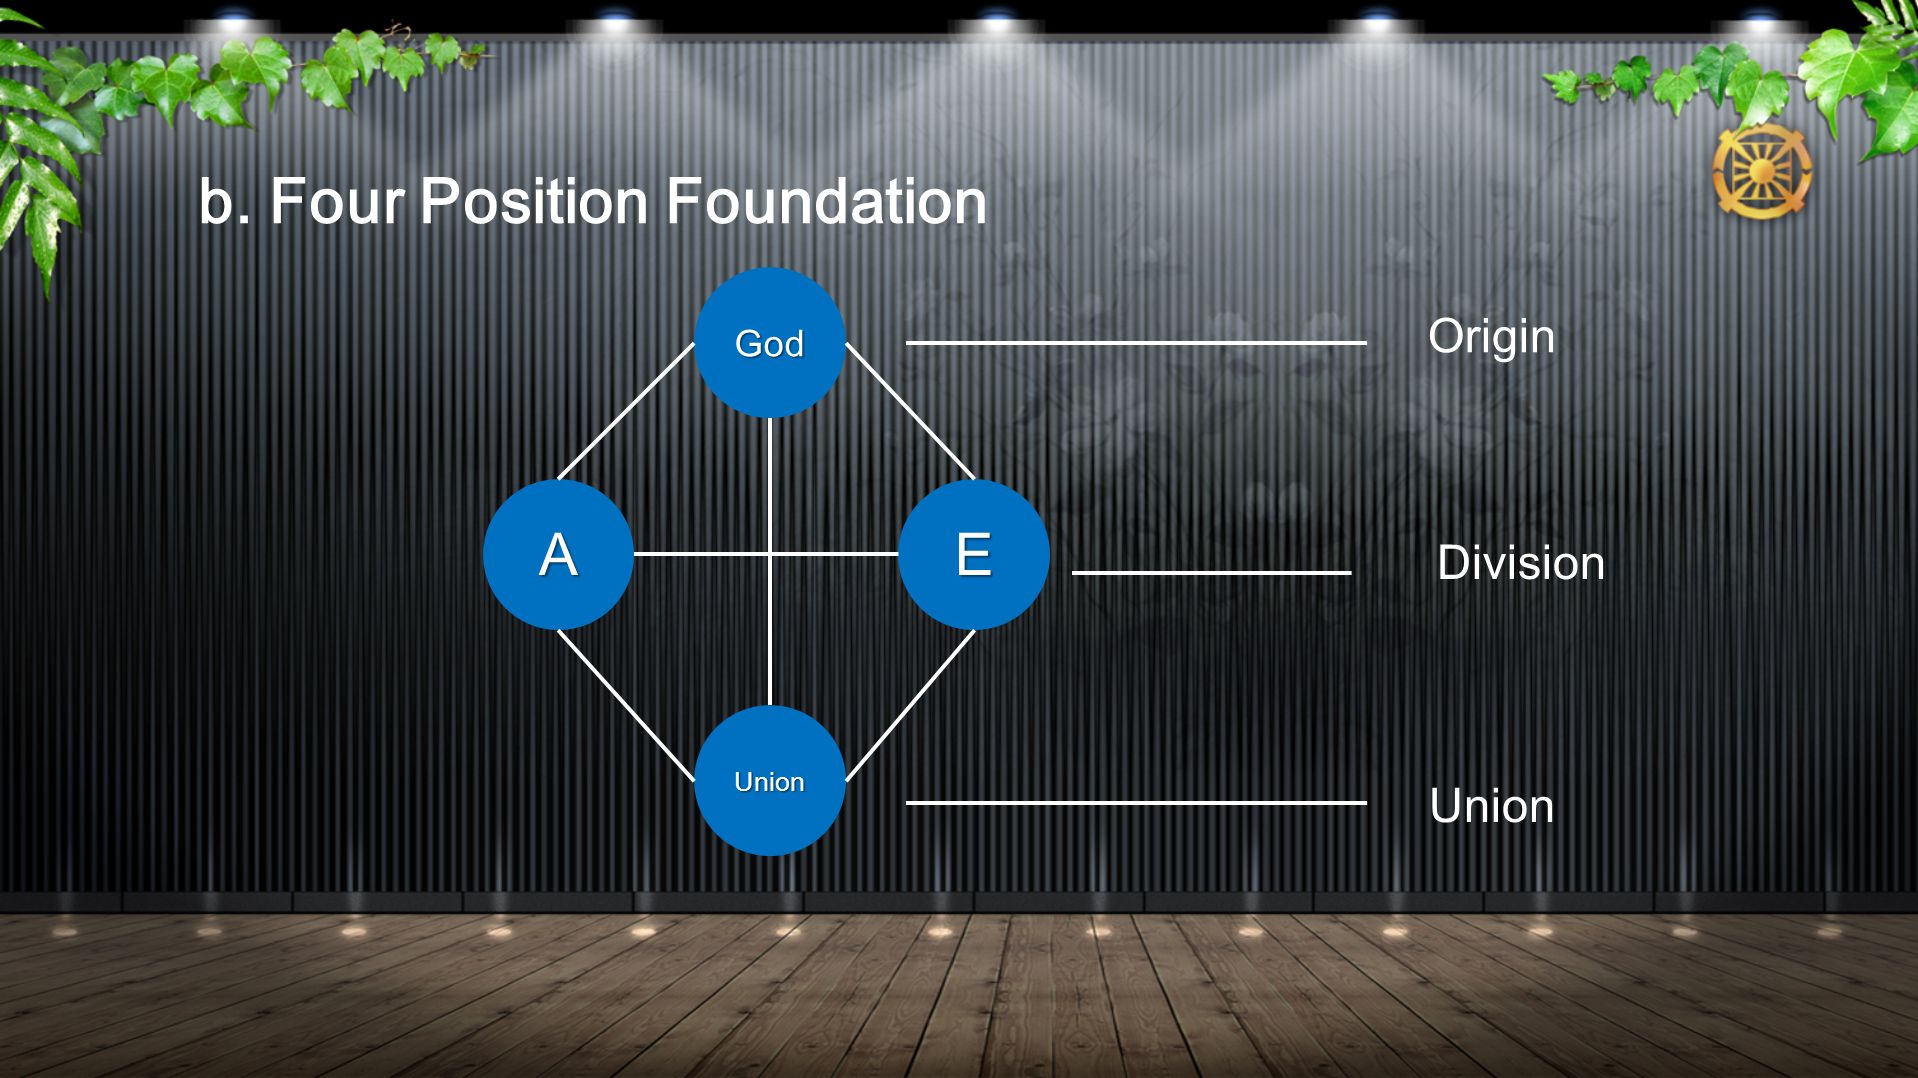 God AE Union Origin Division Union b. Four Position Foundation